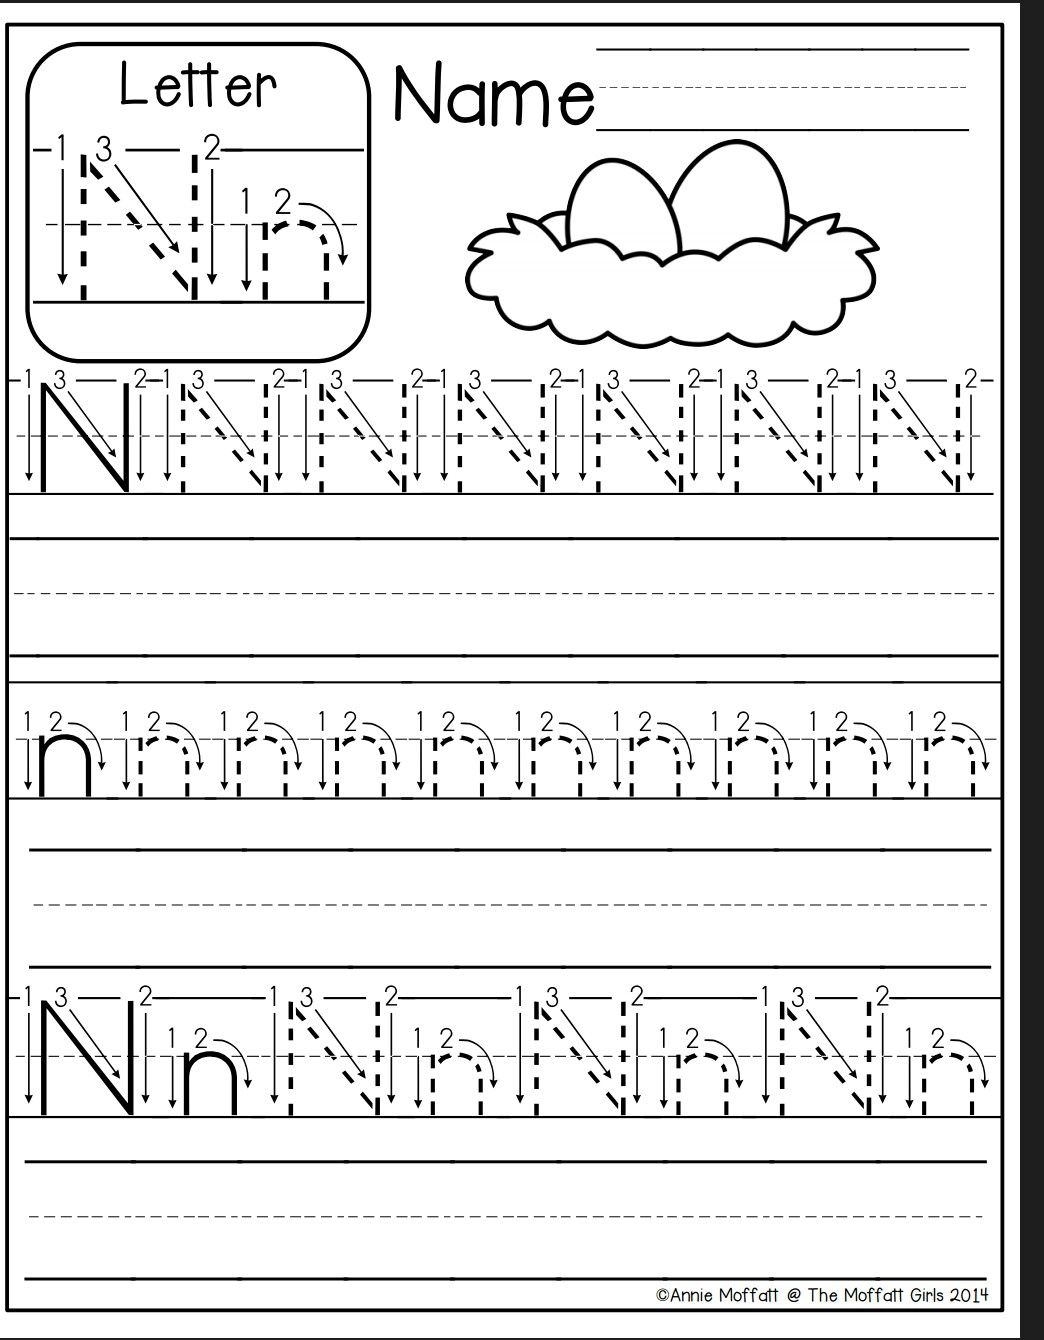 Letter N Worksheet | Letter N Worksheet, Preschool Writing throughout Letter N Worksheets For Toddlers